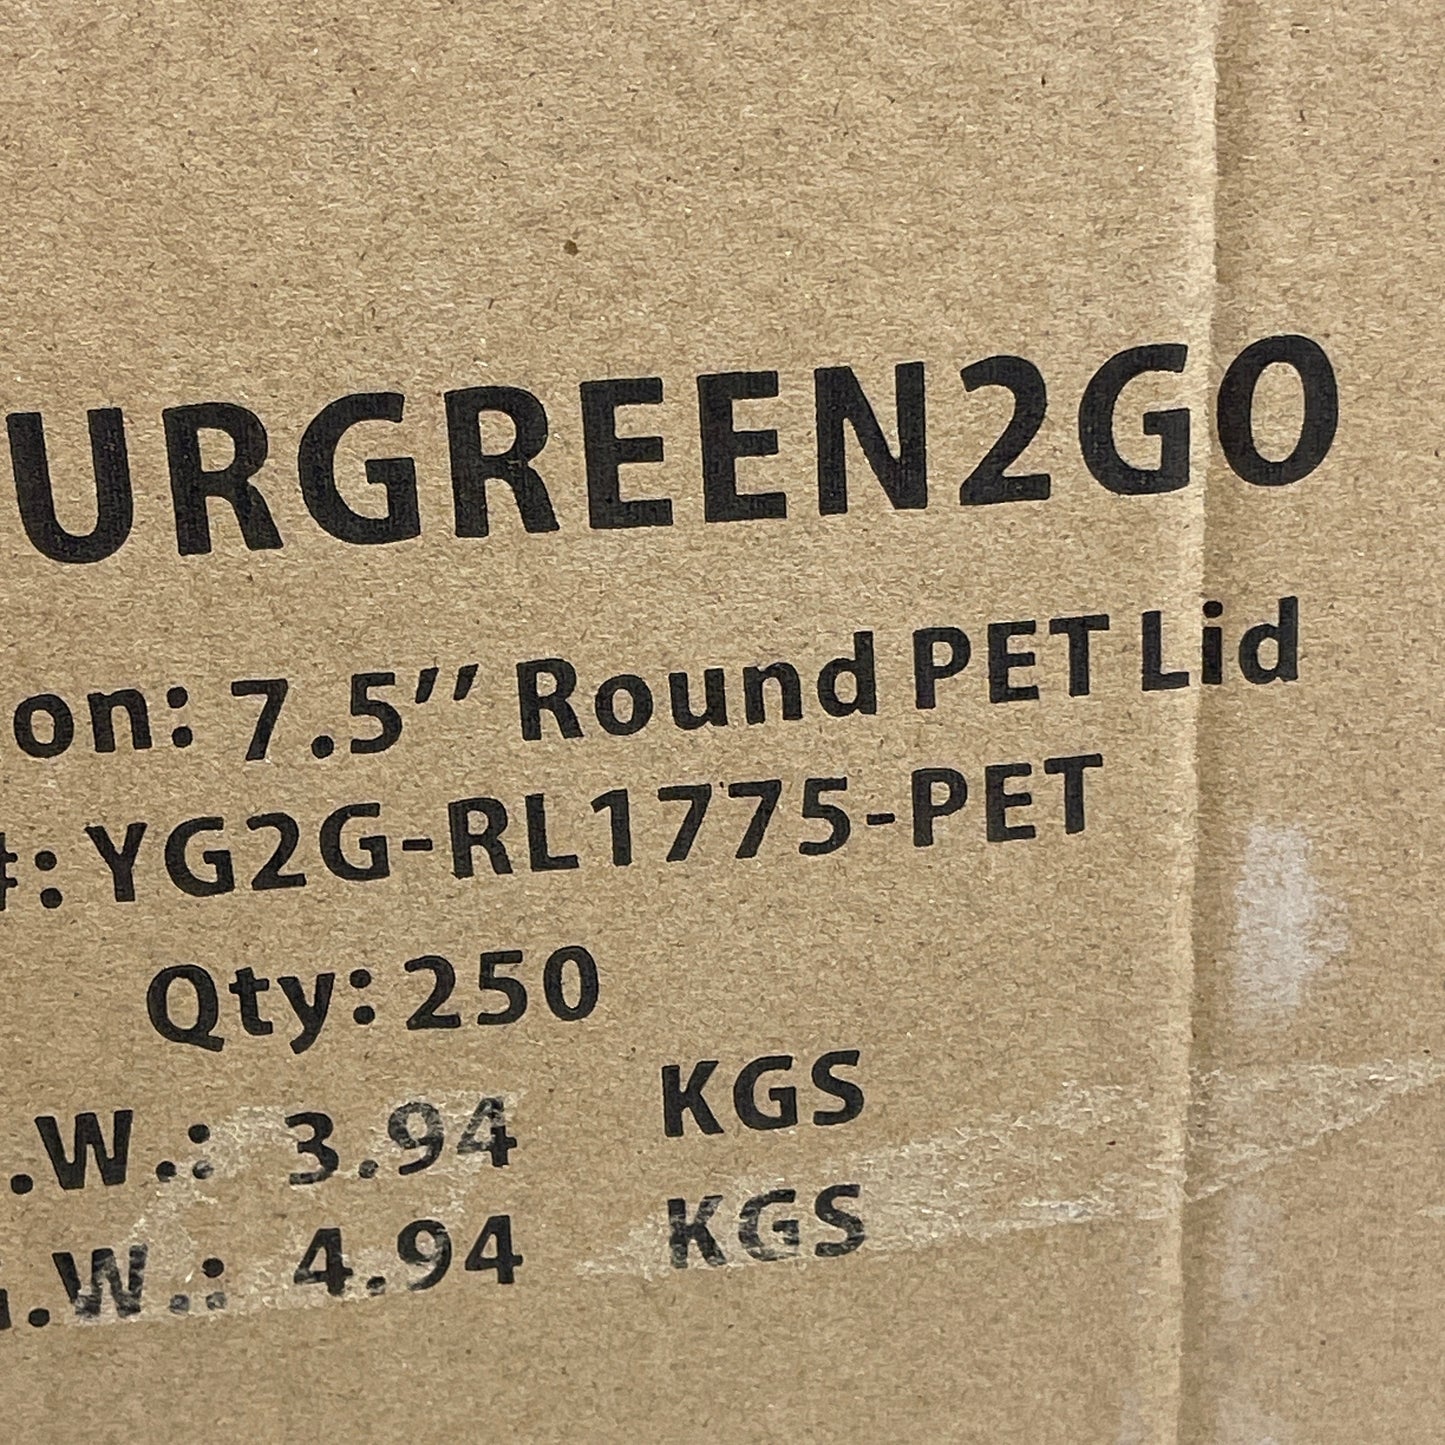 ZA@ YOURGREEN2GO PET (250 LIDS) Plastic Lids 7.5" Round Clear YG2G-RL1775-PET A